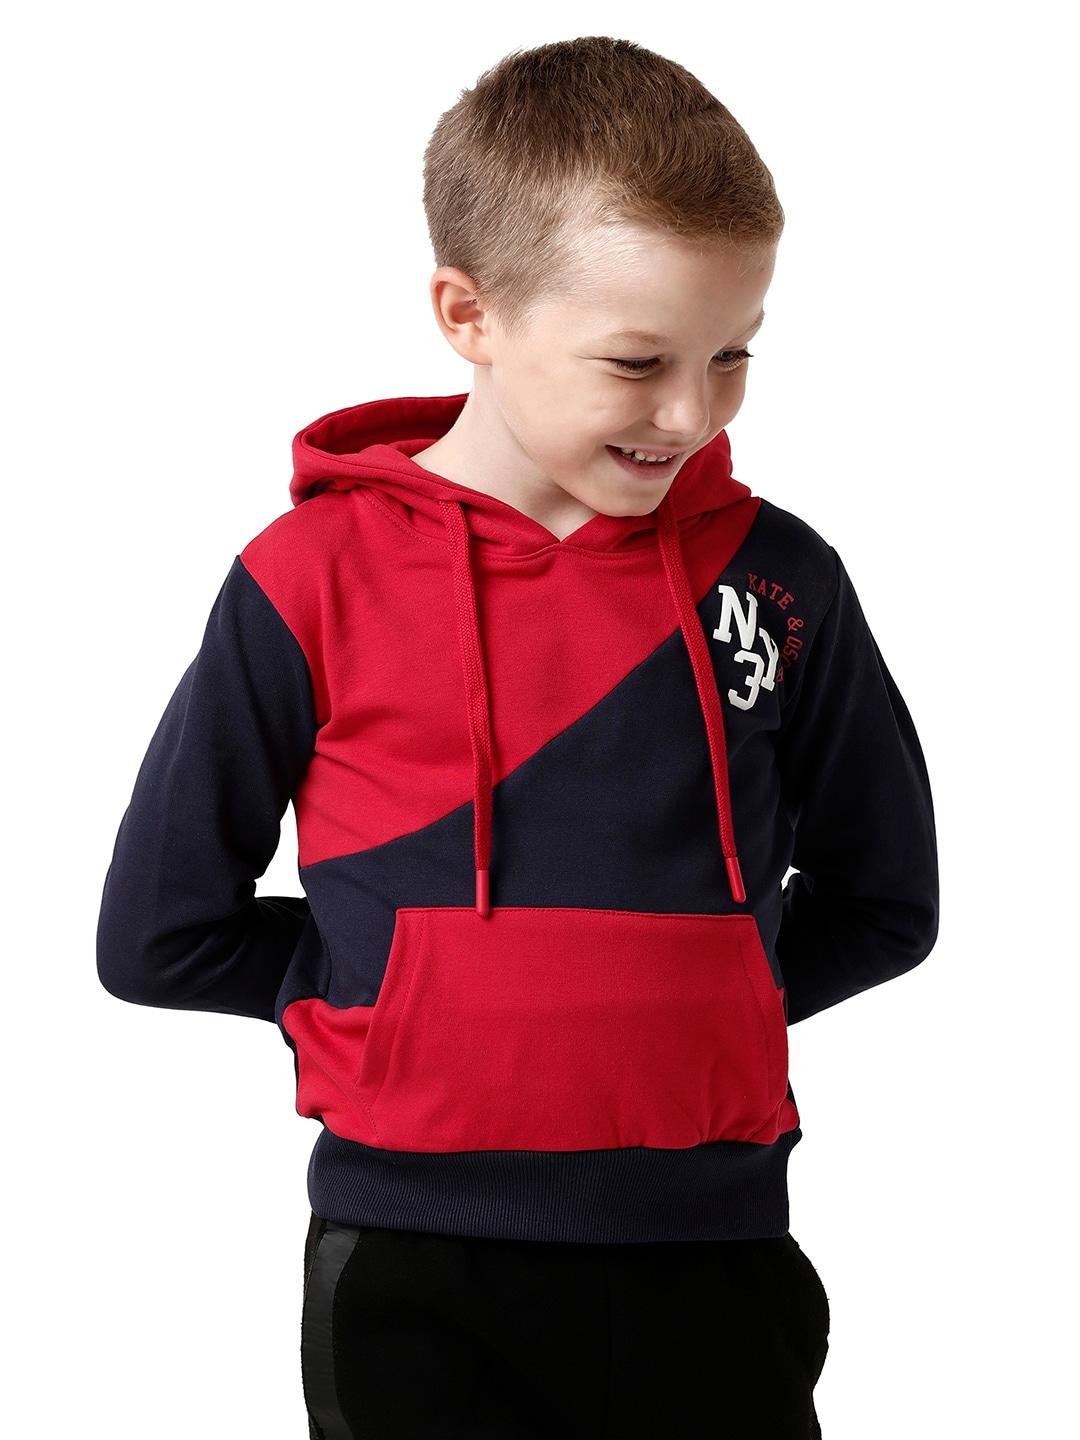 kate & oscar boys red & black colourblocked hooded cotton sweatshirt